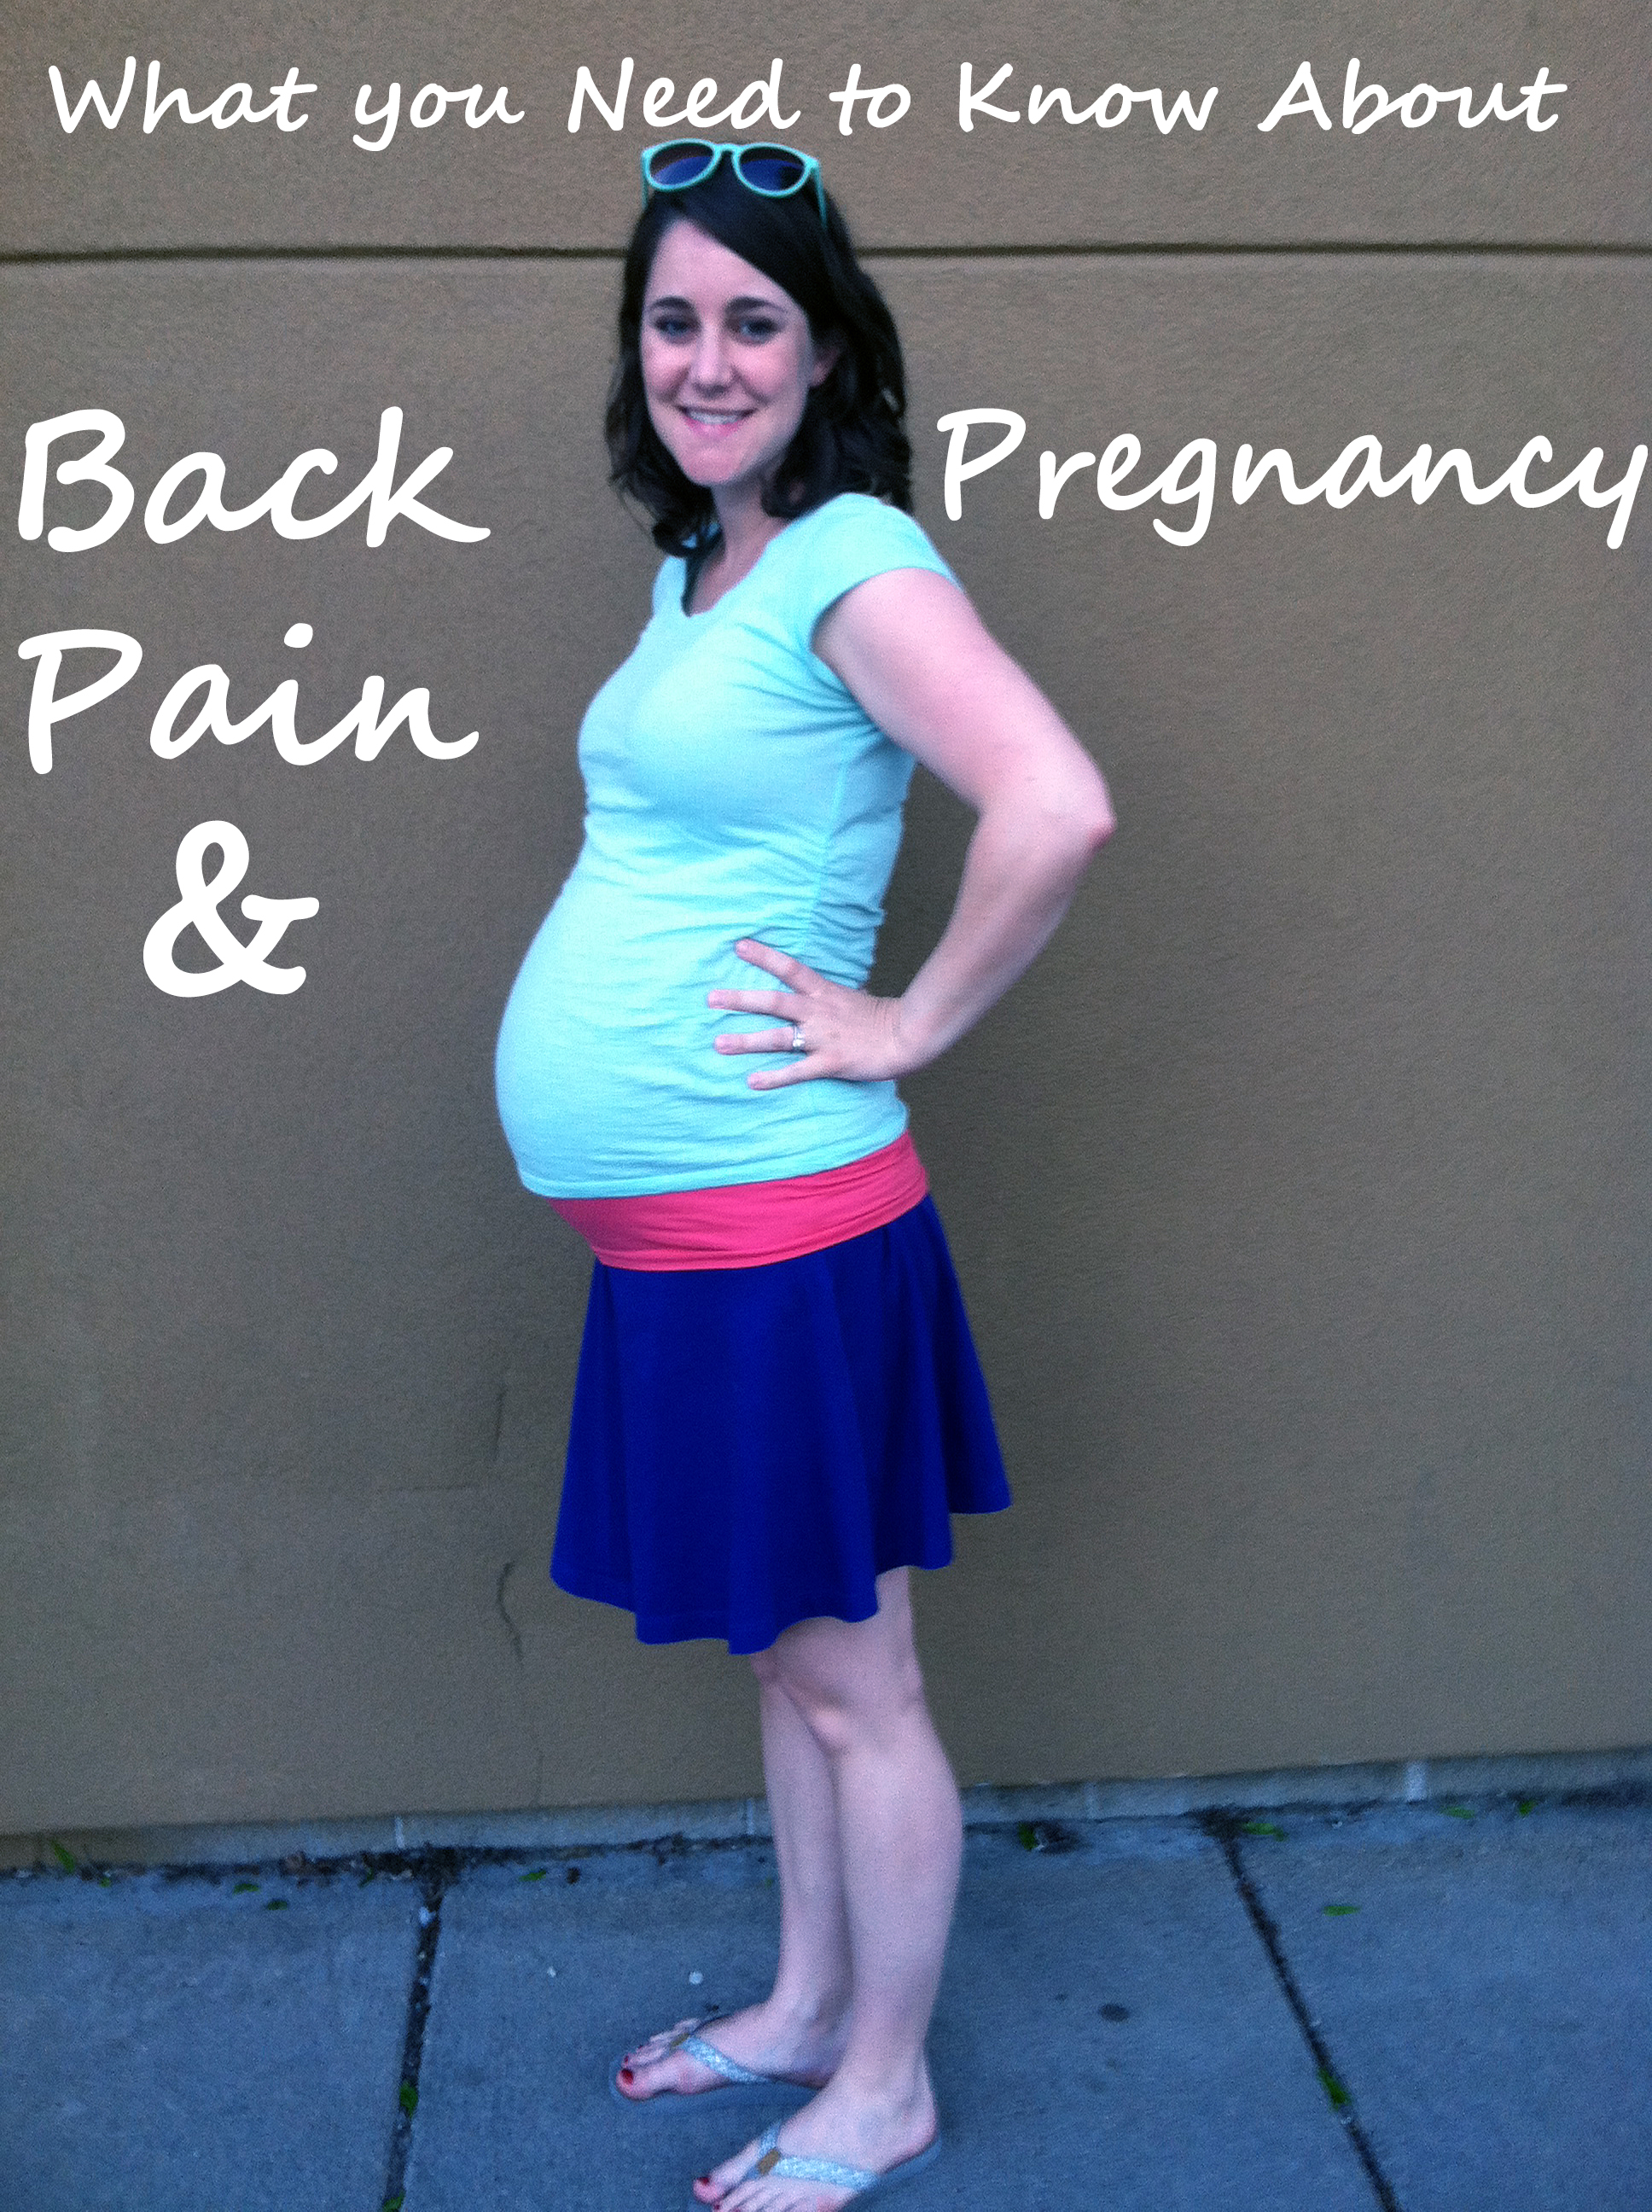 back pain, pregnancy, pregnant